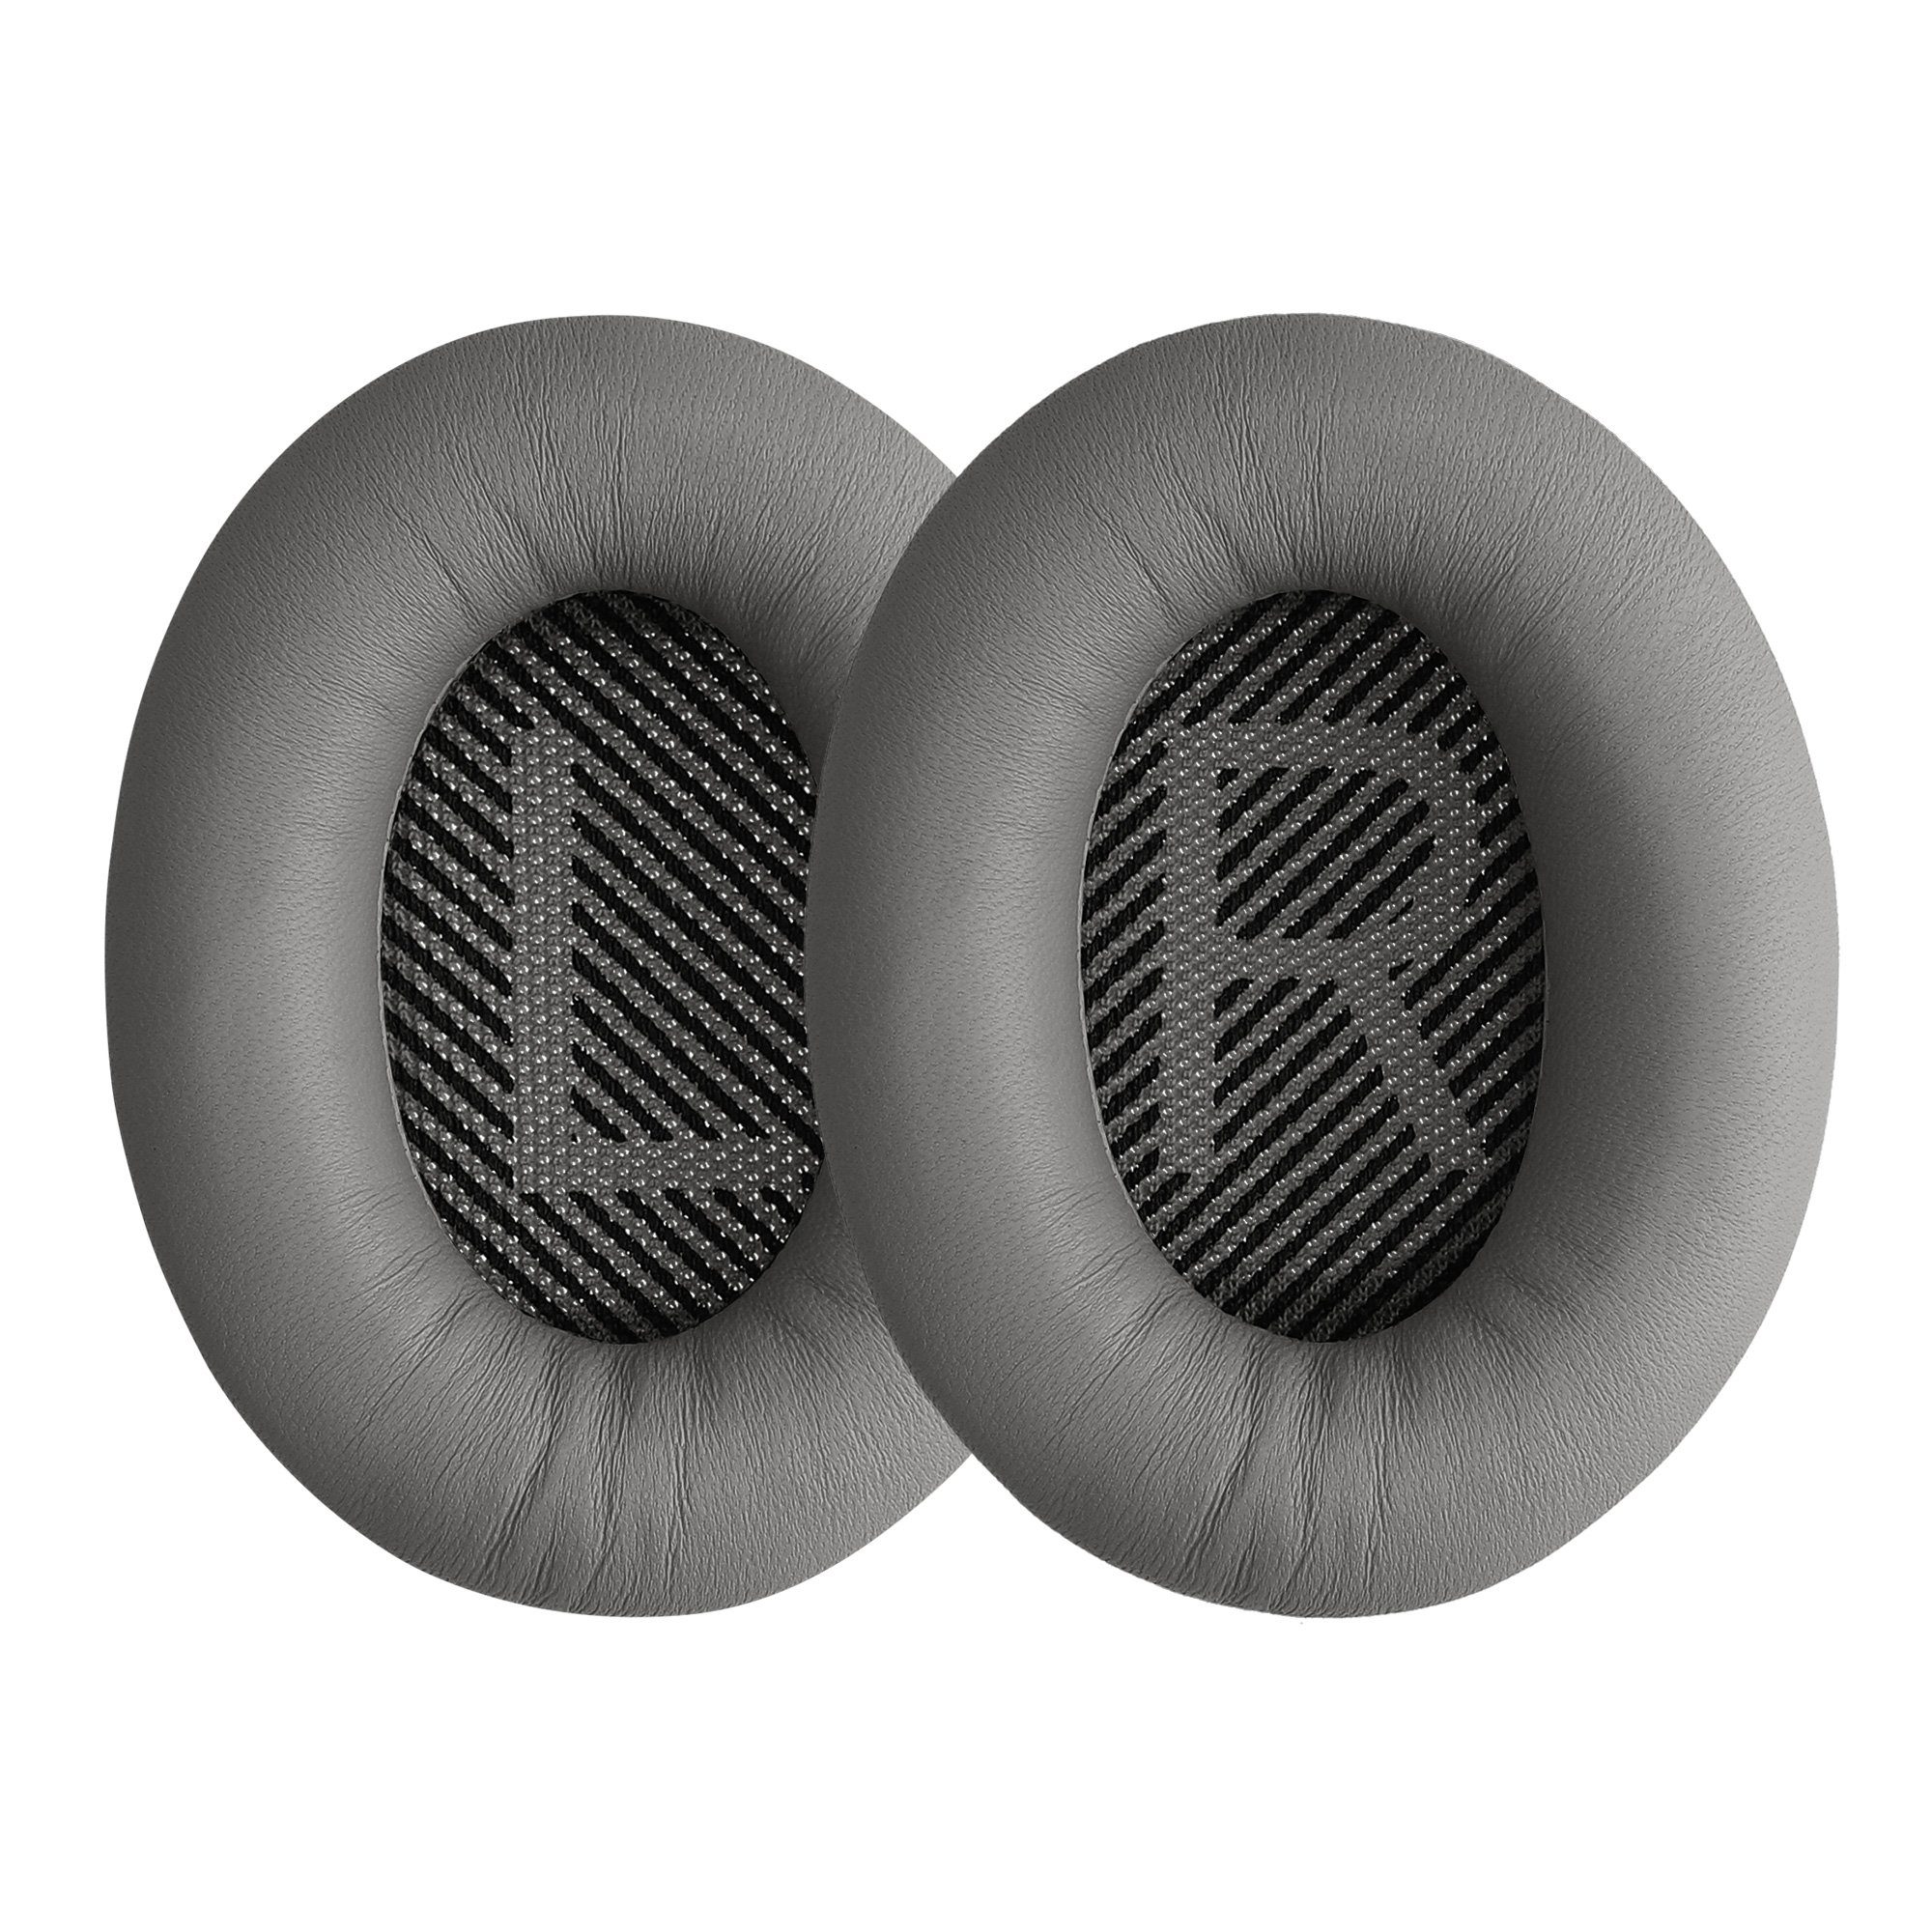 kwmobile 2x Ohr Polster für Bose Soundlink Around-Ear Wireless II Ohrpolster (Ohrpolster Kopfhörer - Kunstleder Polster für Over Ear Headphones) Grau